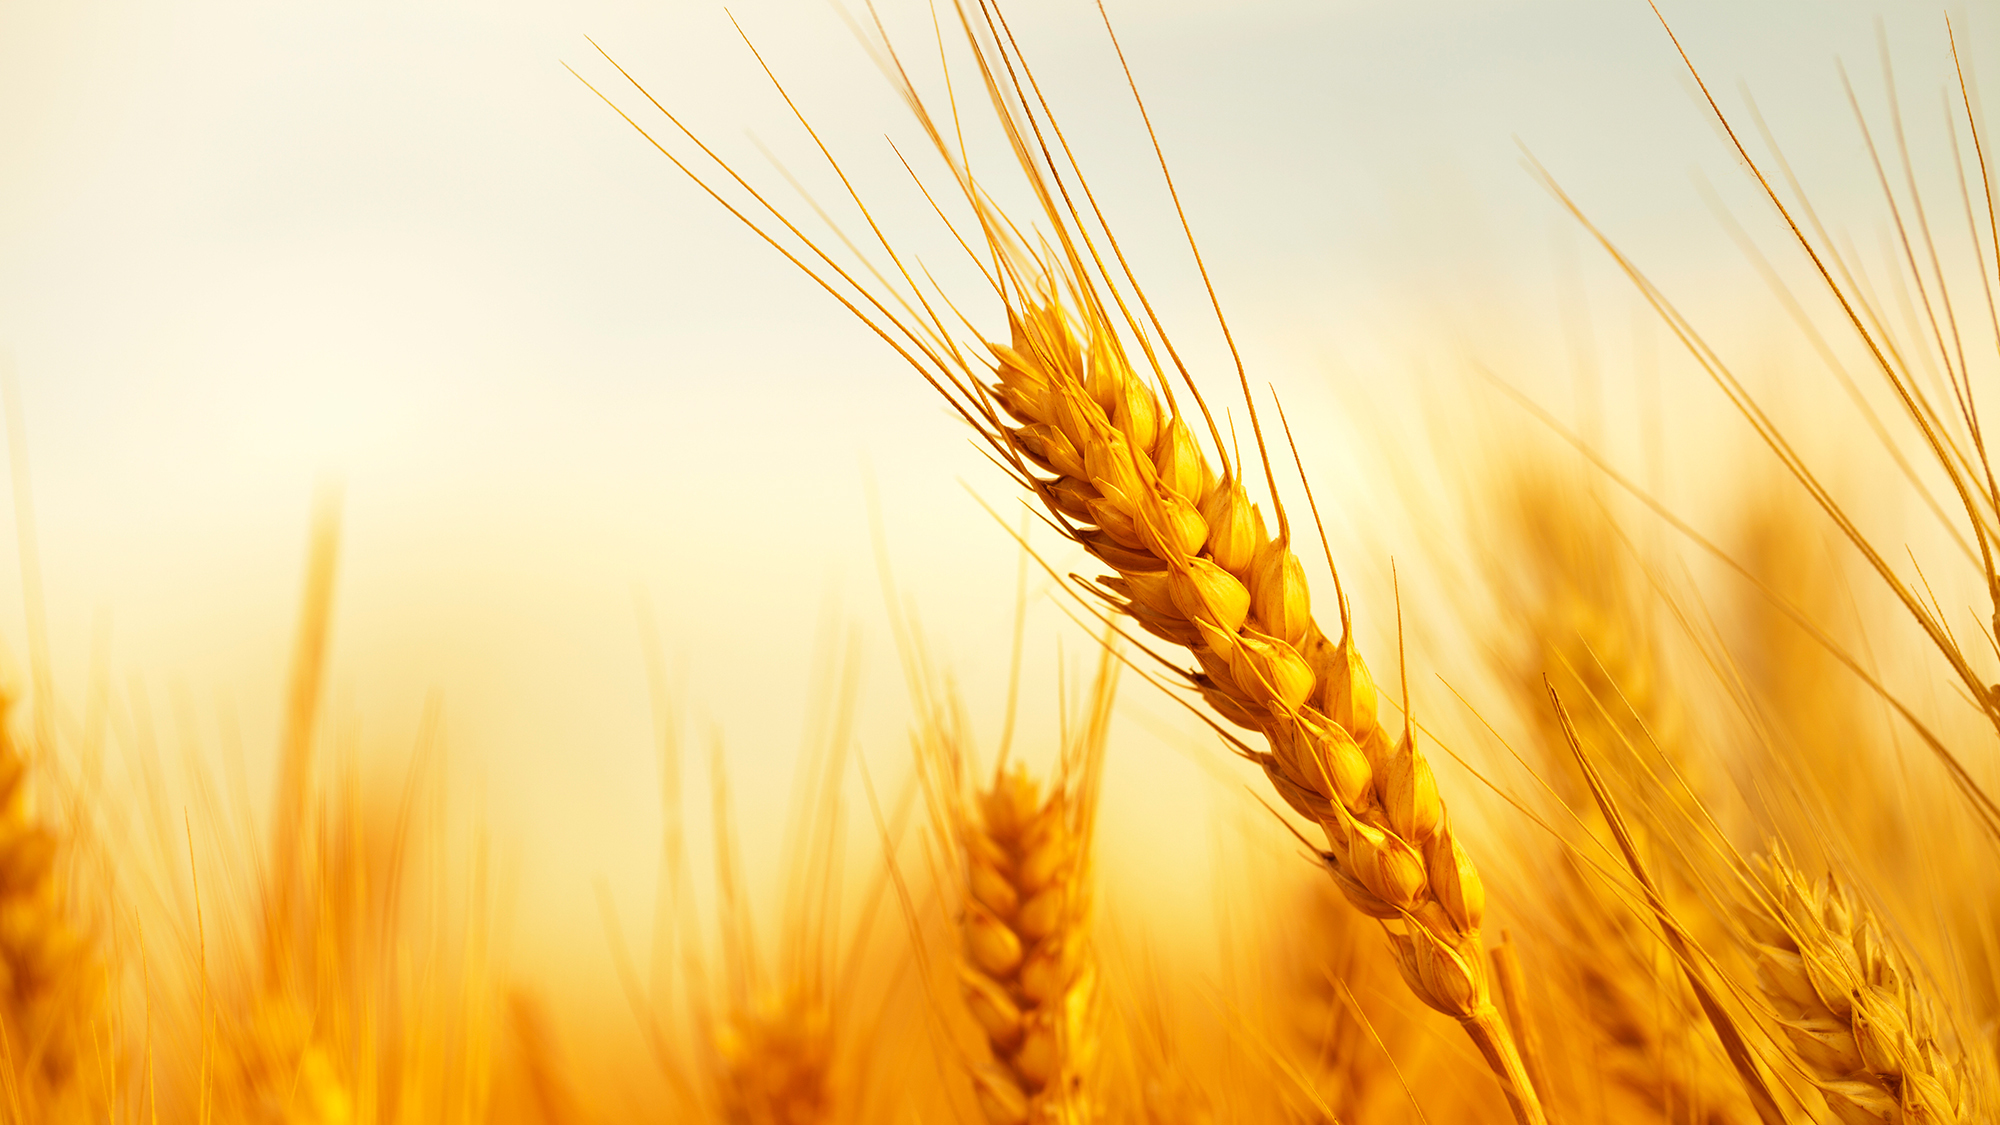 Grain spike (16:9)